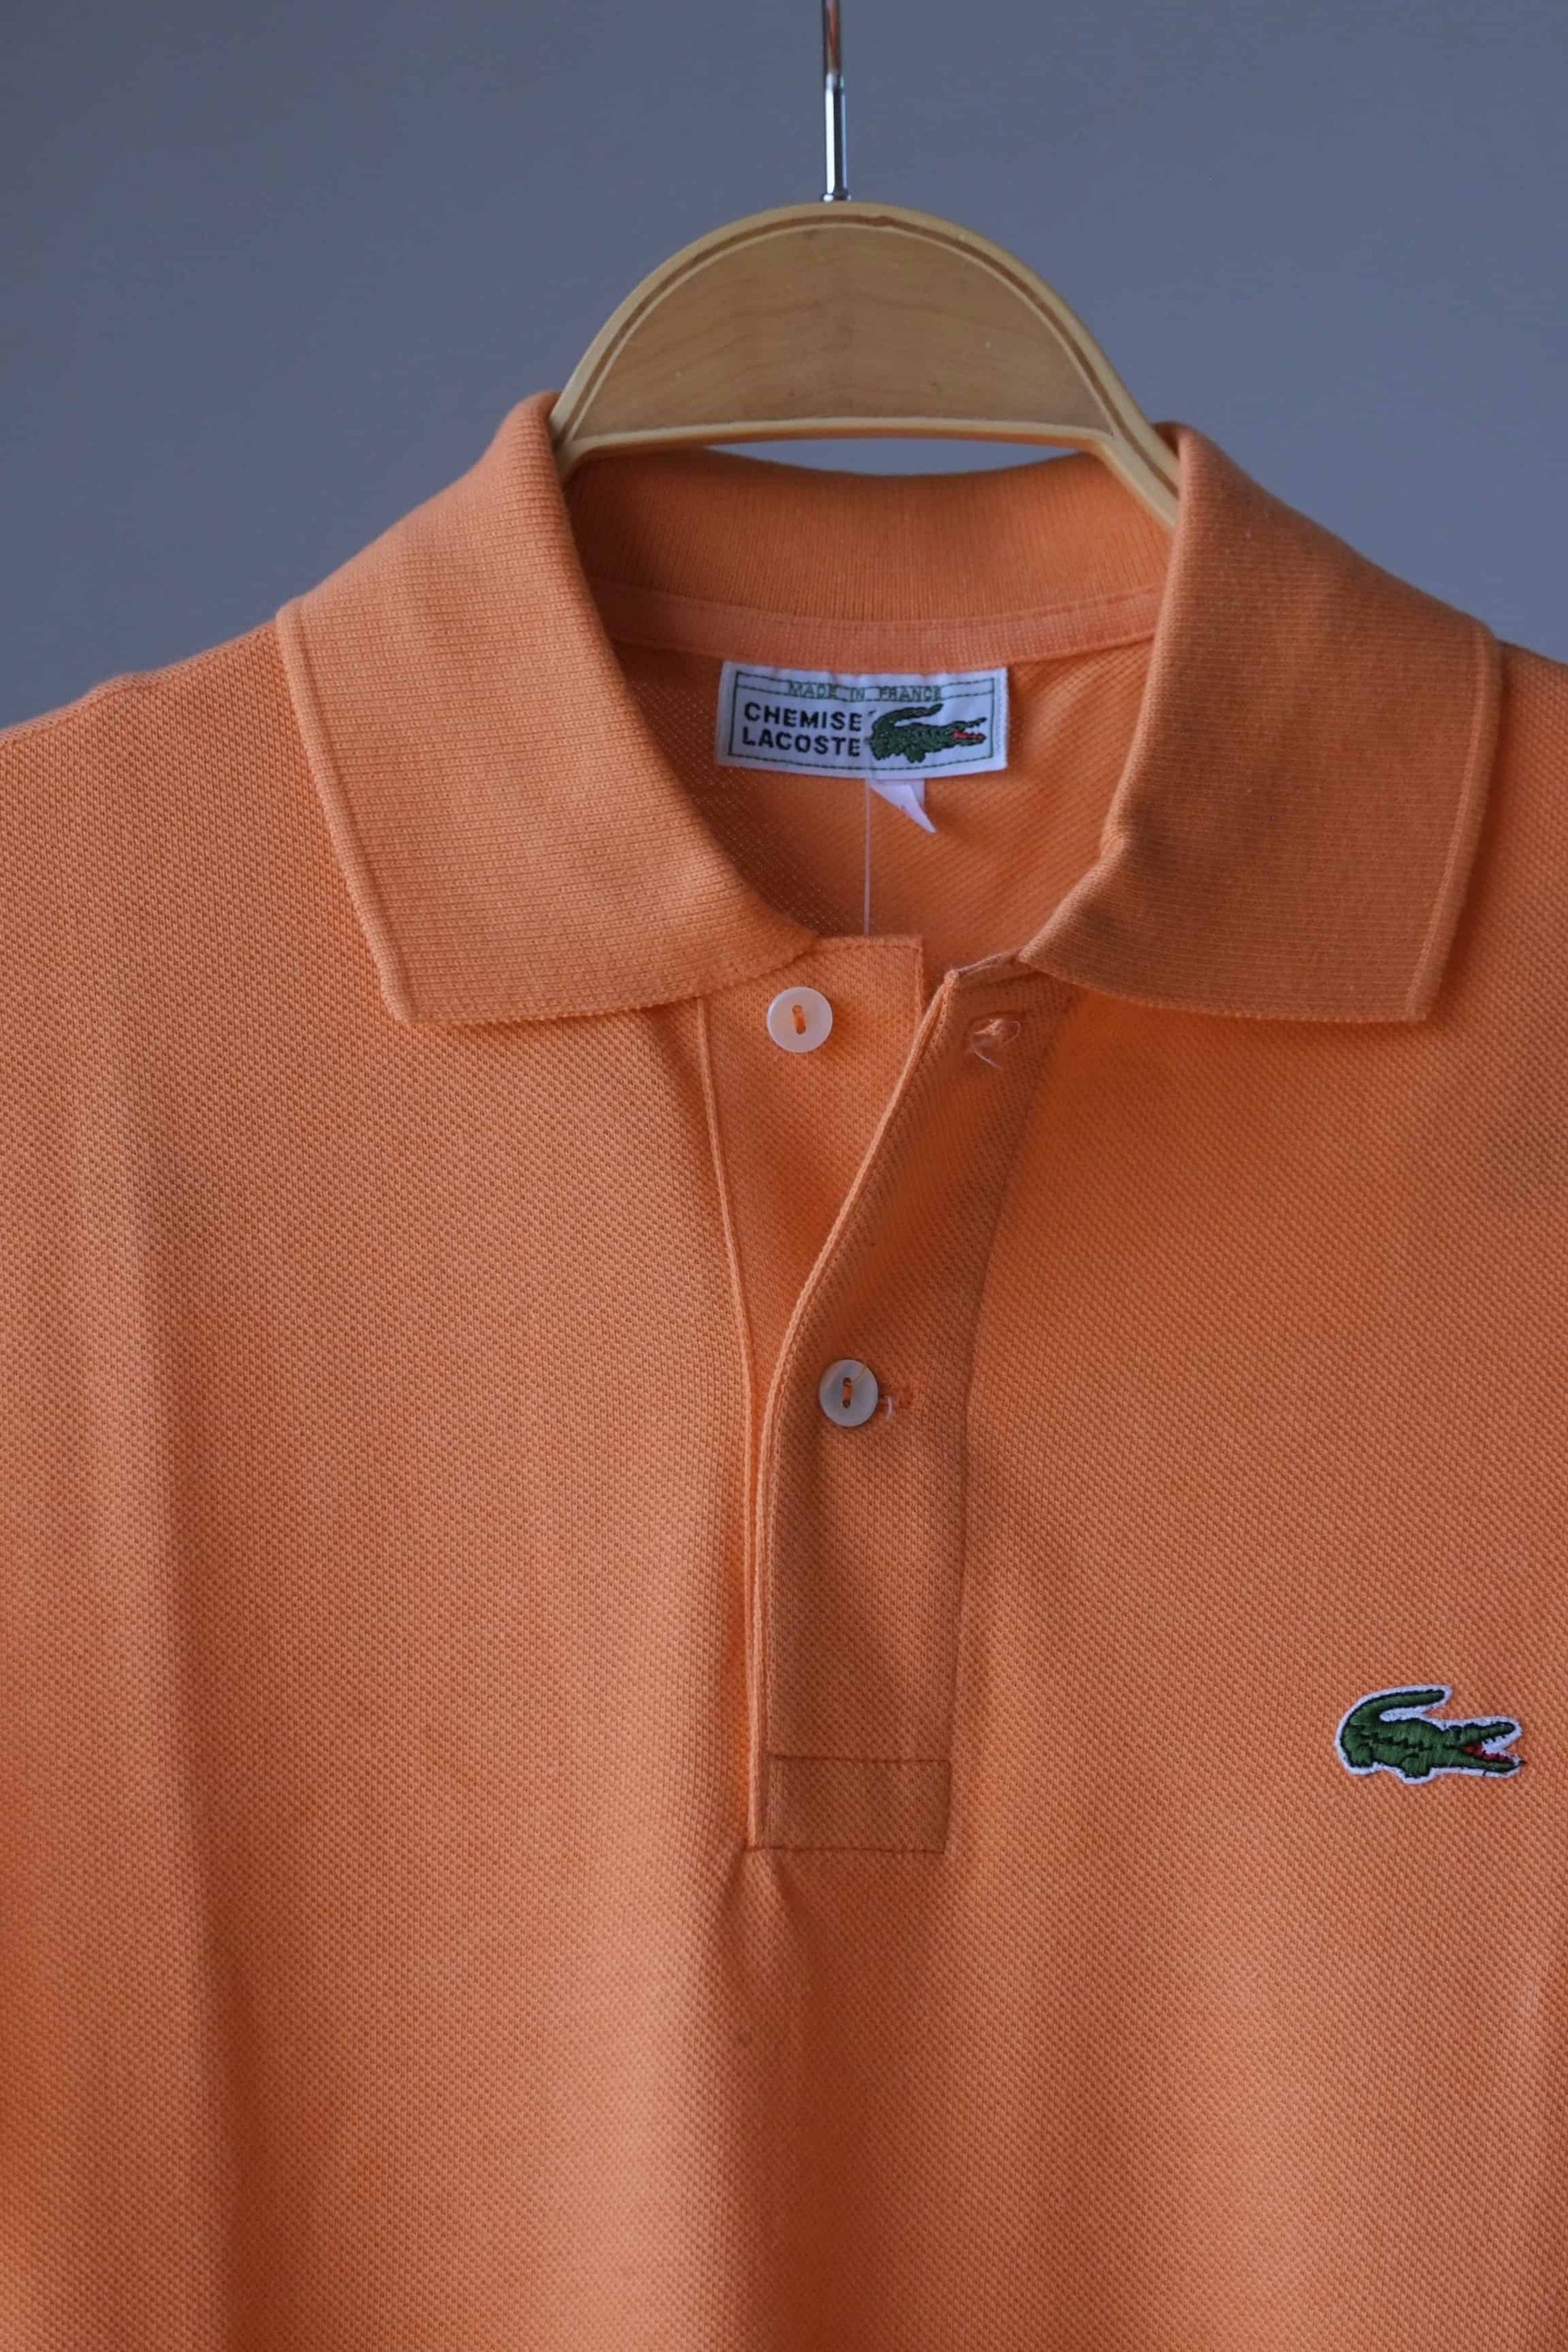 Close up of LACOSTE Retro Shirt in peach orange color